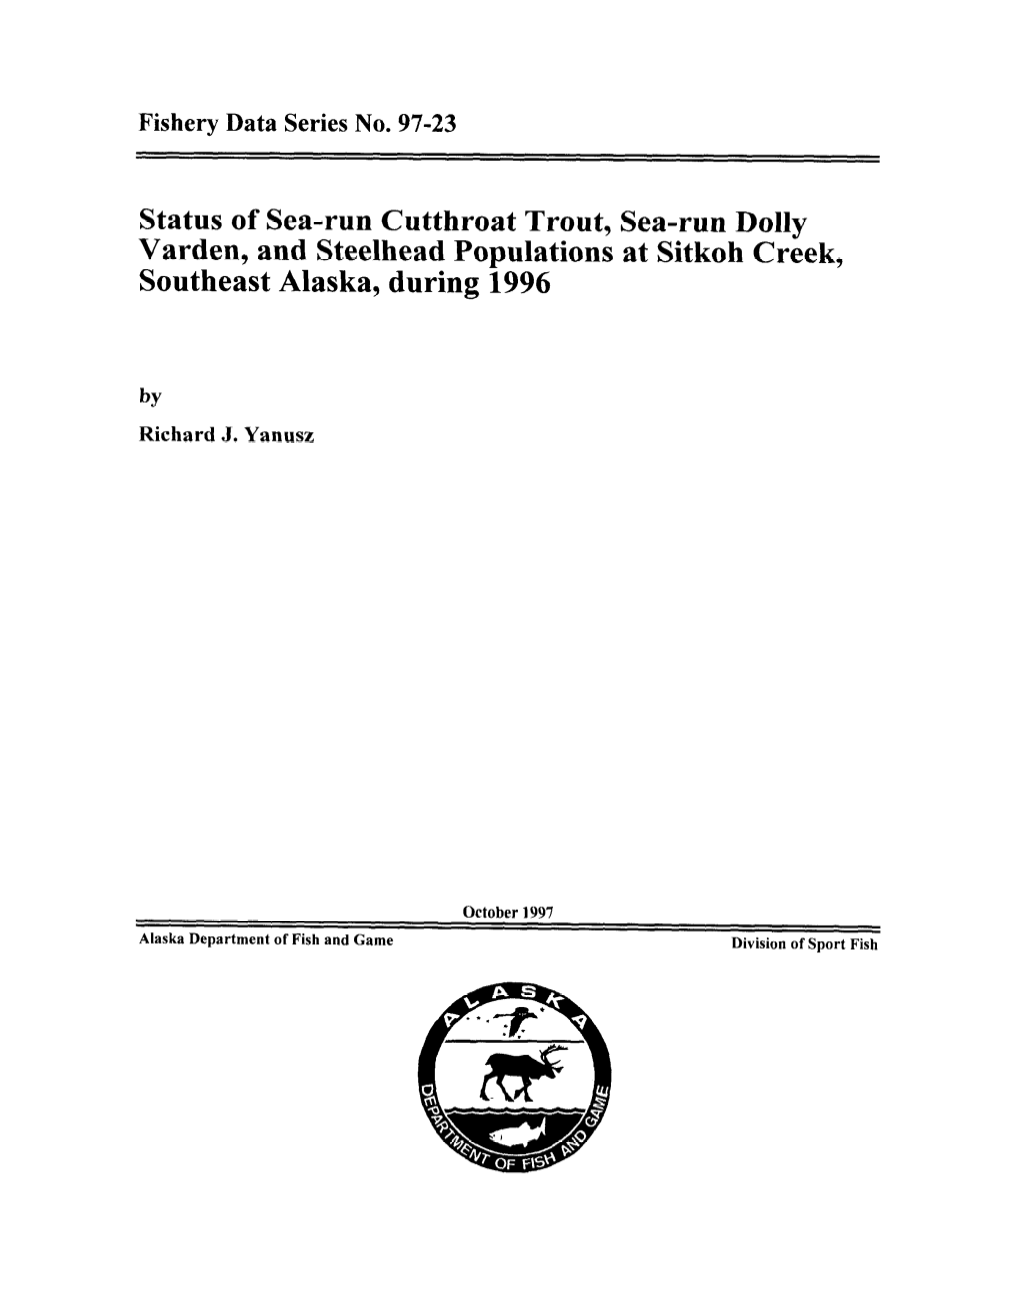 Status of Sea-Run Cutthroat Trout, Sea-Run Dolly Varden, and Steelhead Populations at Sitkoh Creek, Southeast Alaska, During 1996